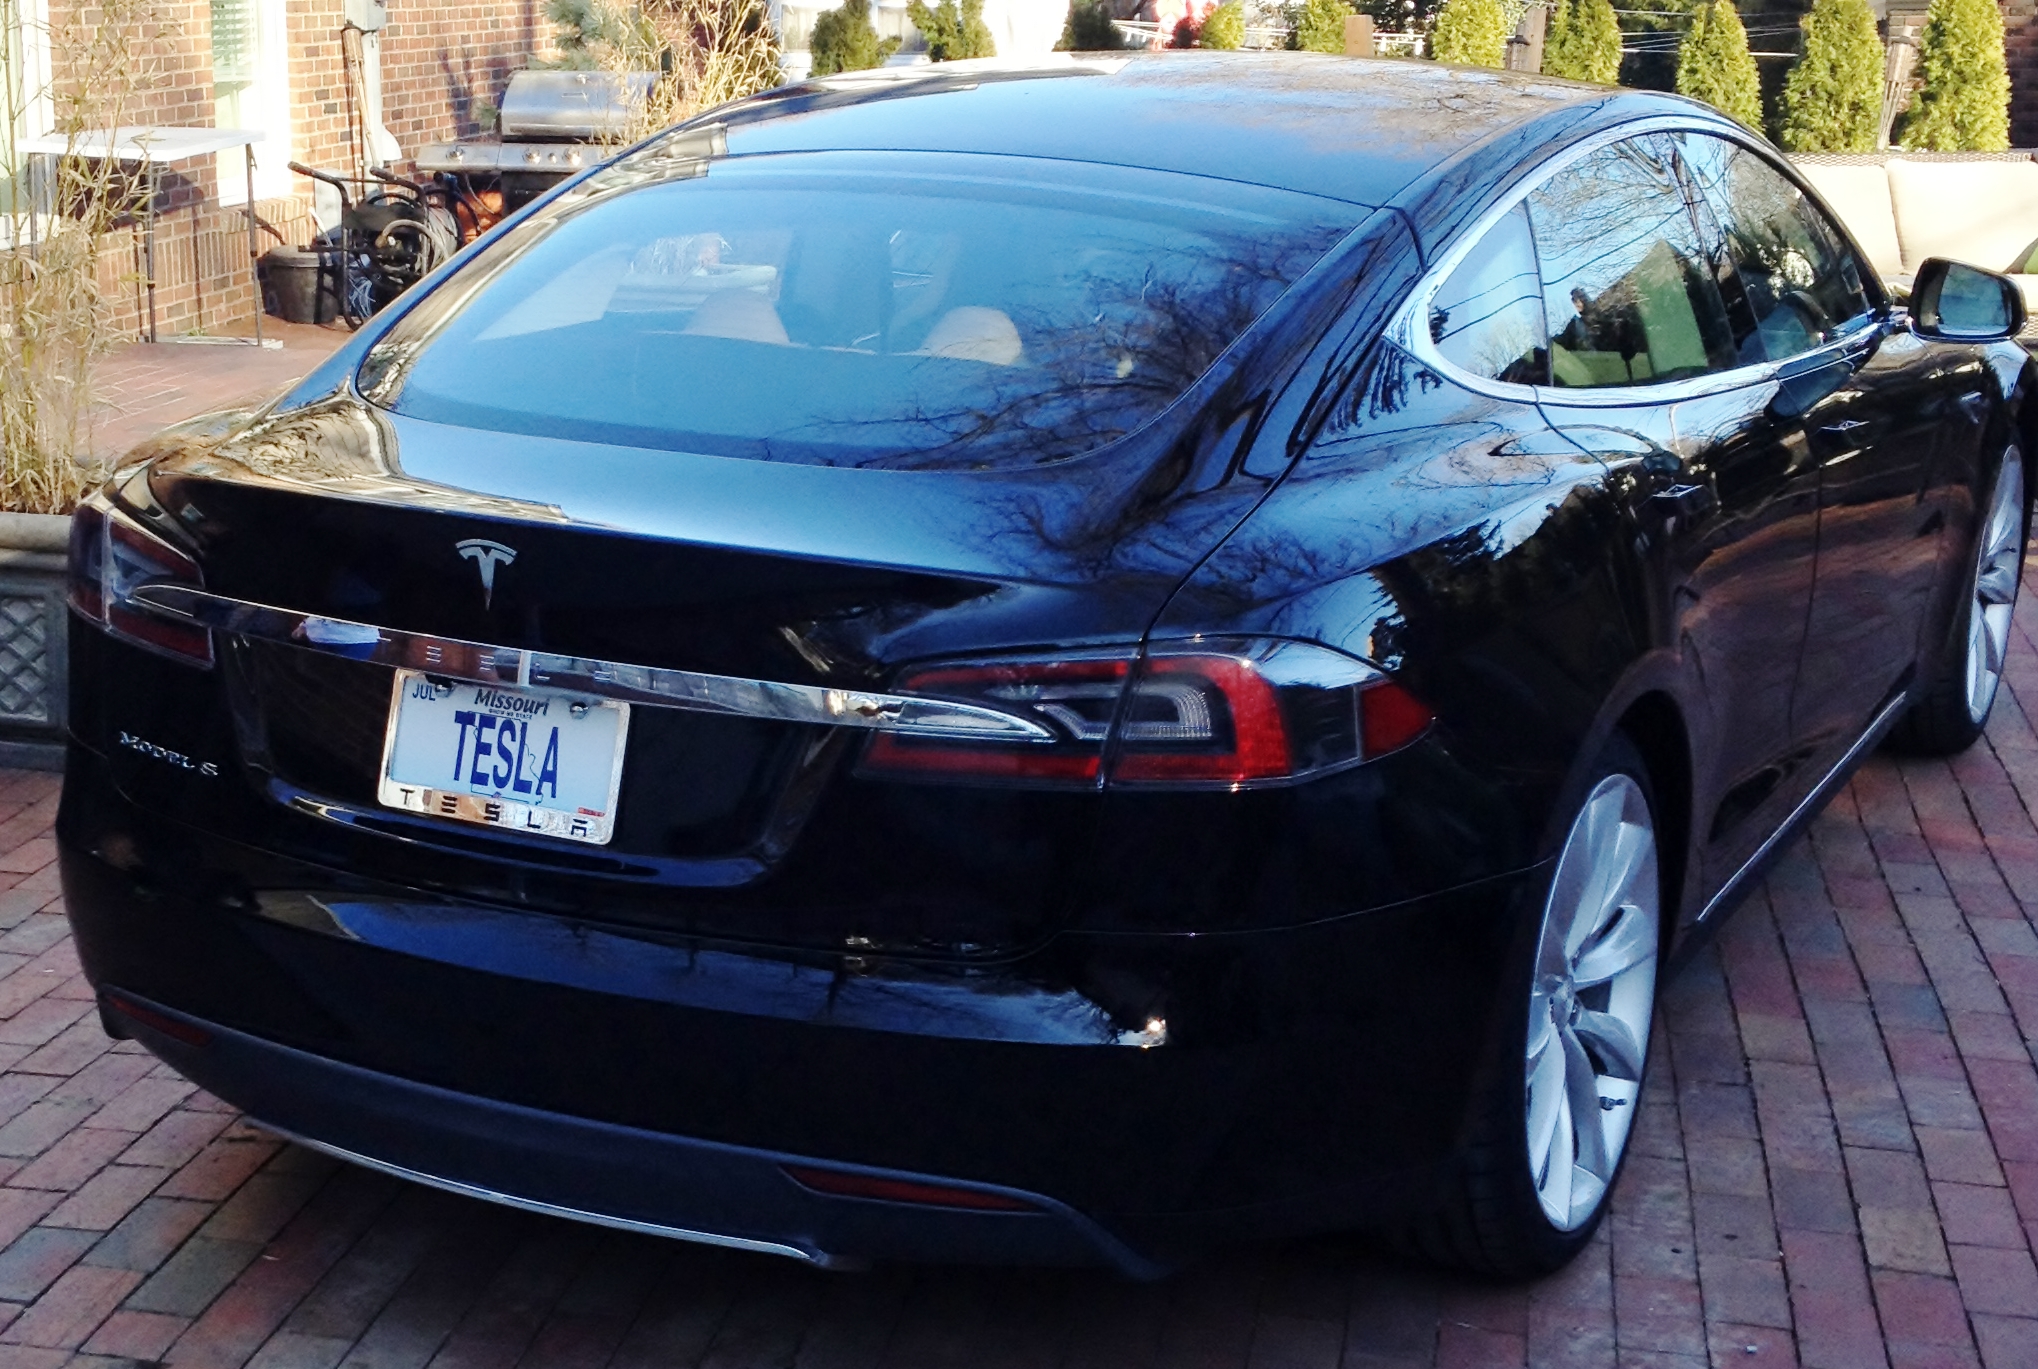 Tesla Plate.jpg